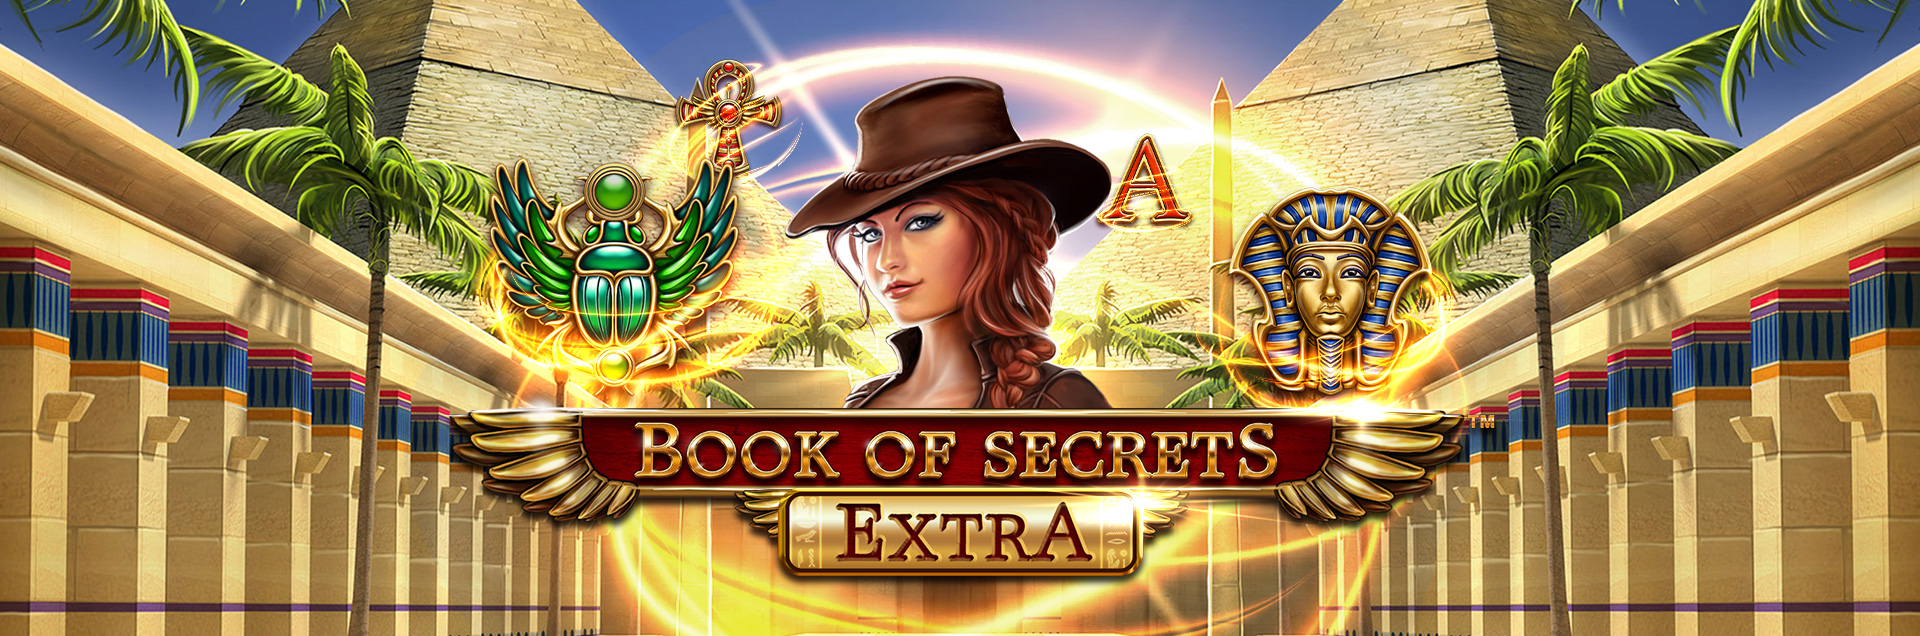 Book of Secrets Extra header games fimal